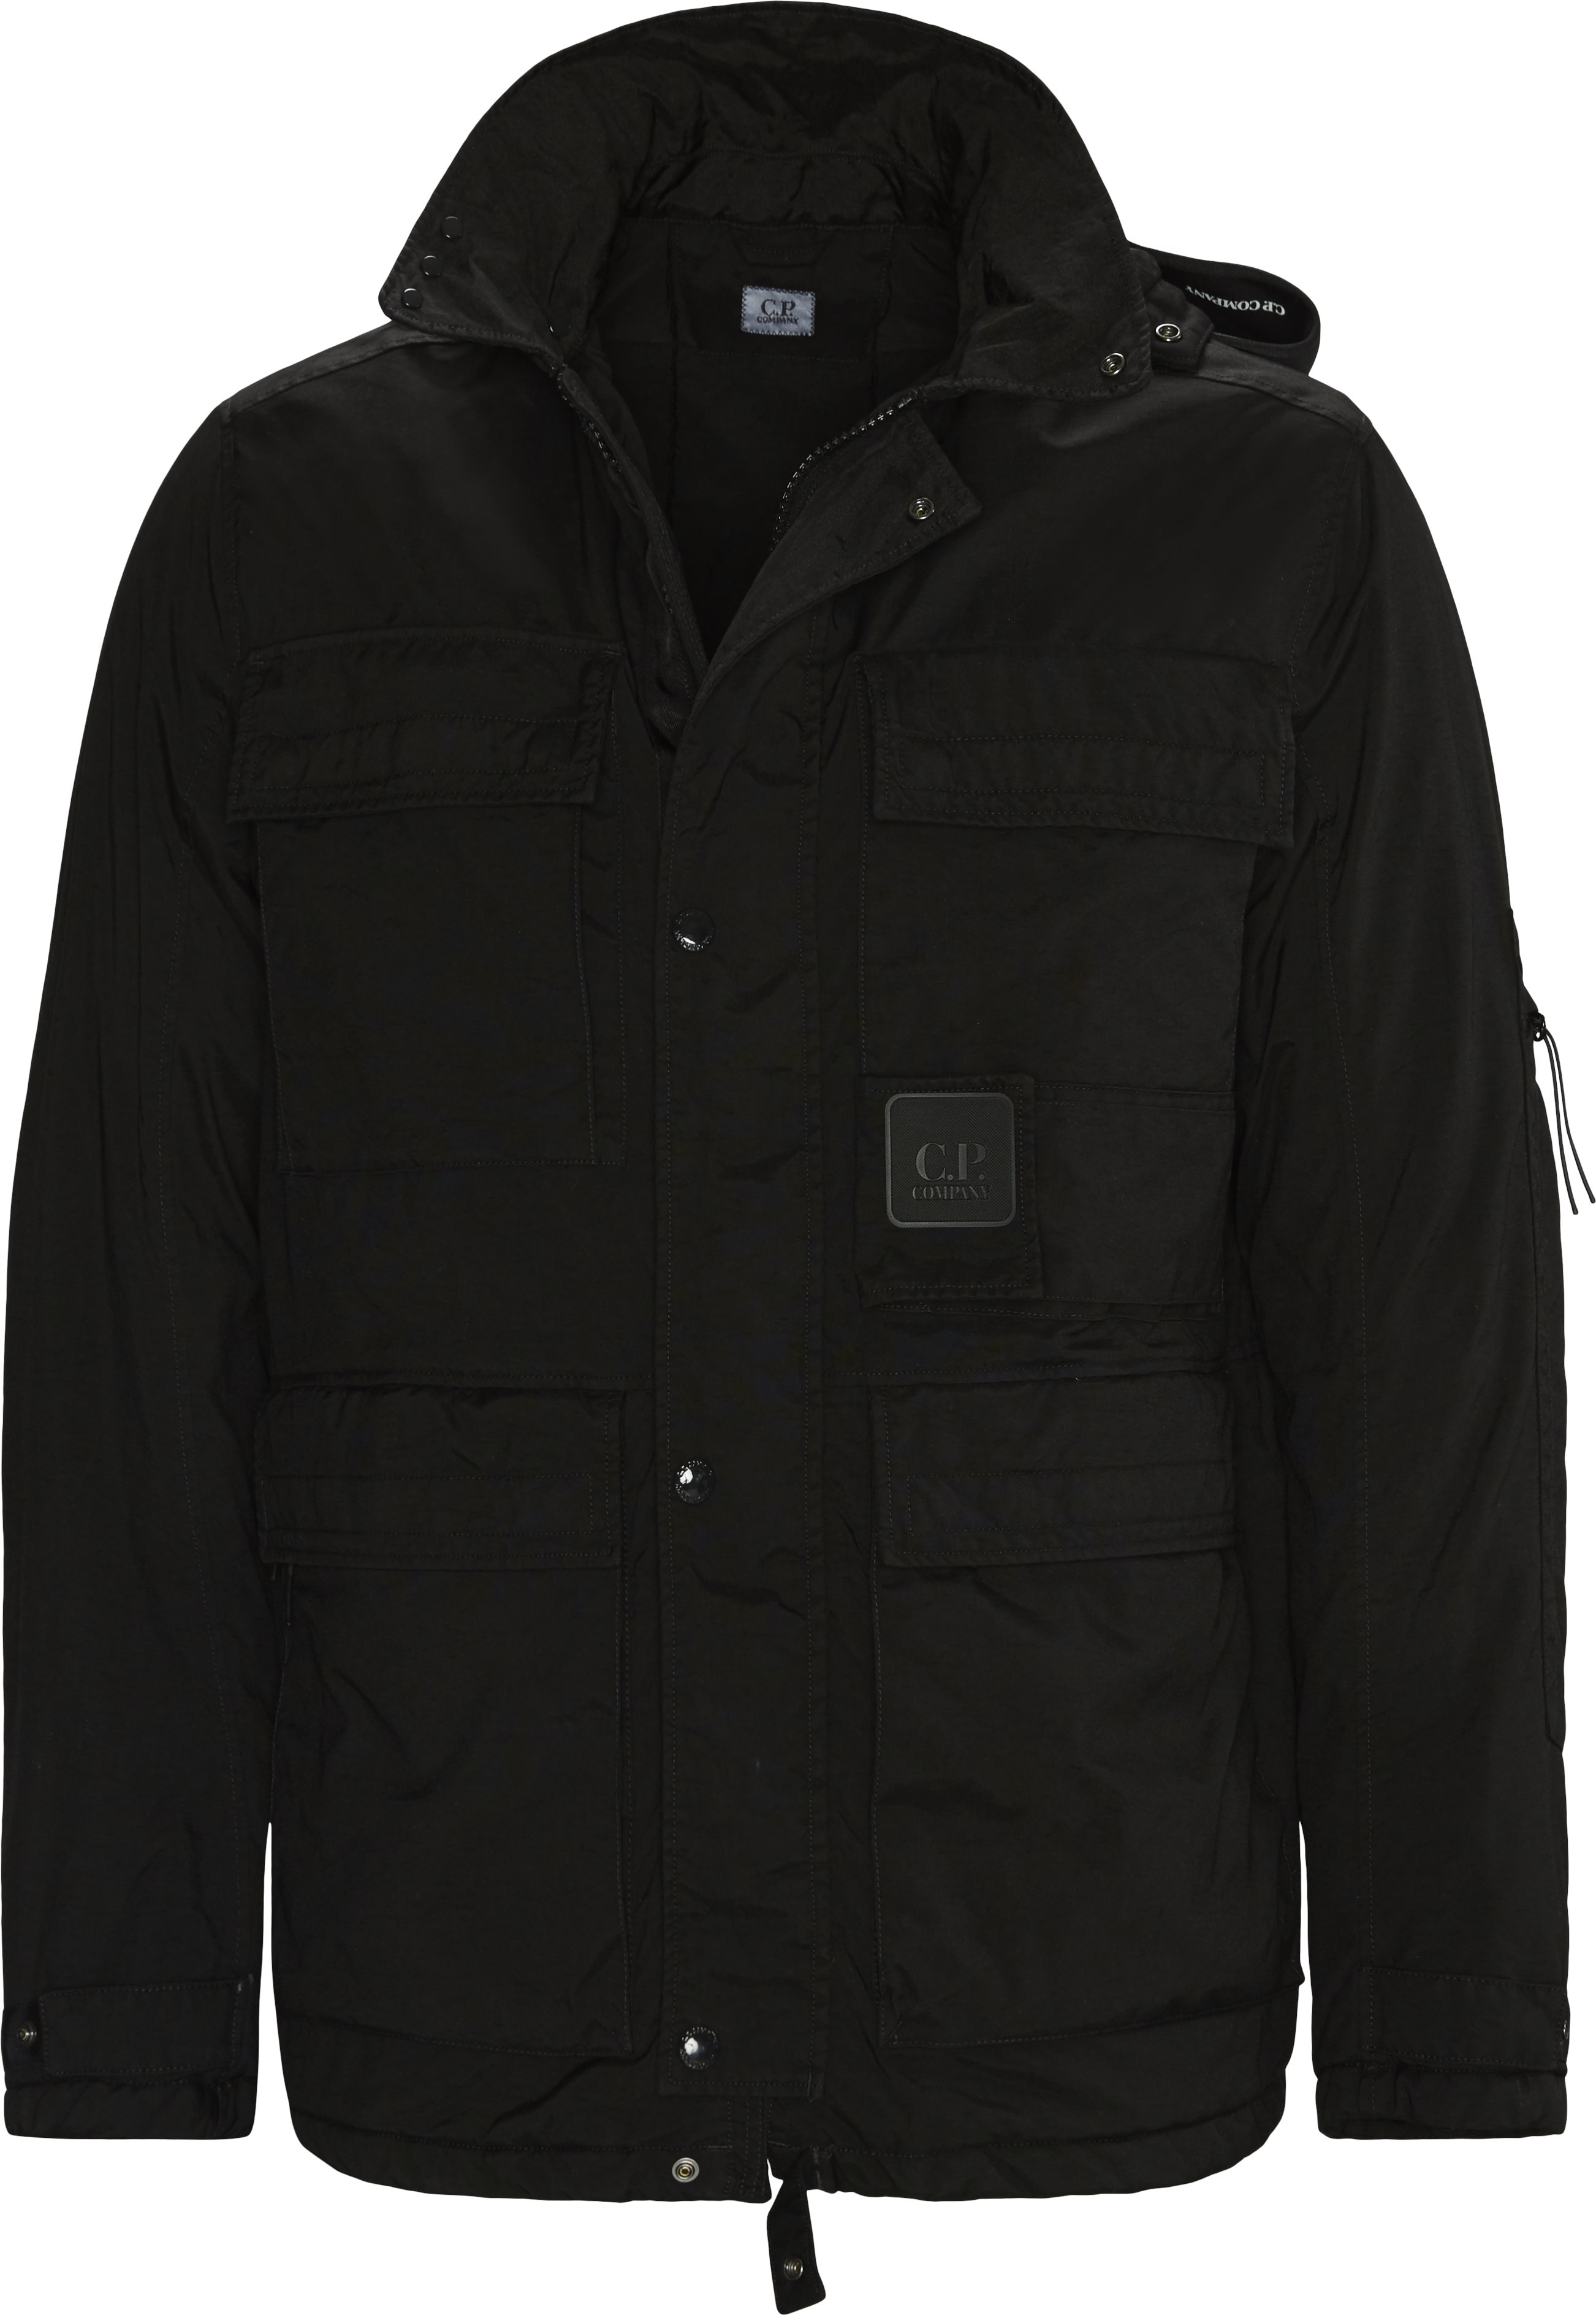 Taylon P Jacket - Jackets - Regular fit - Black